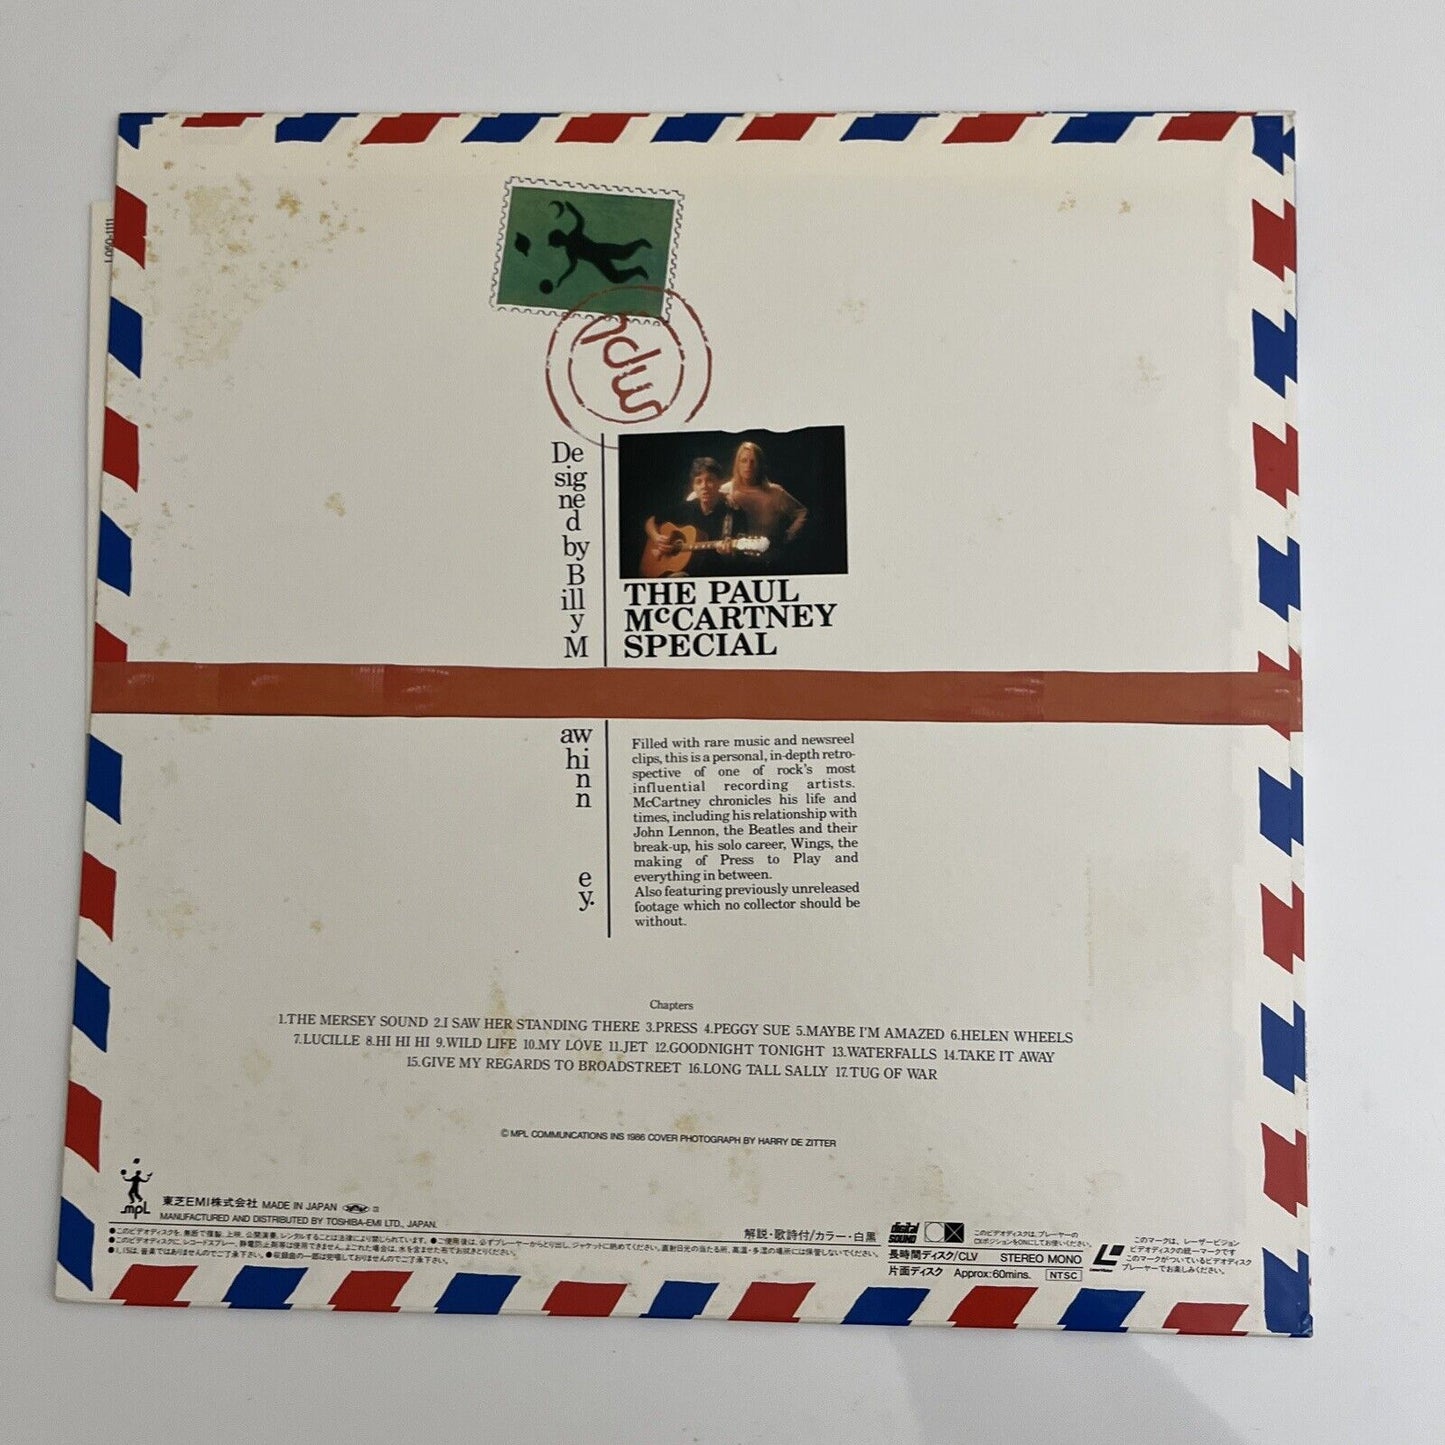 The Paul McCartney Special 1986 Laserdisc LD